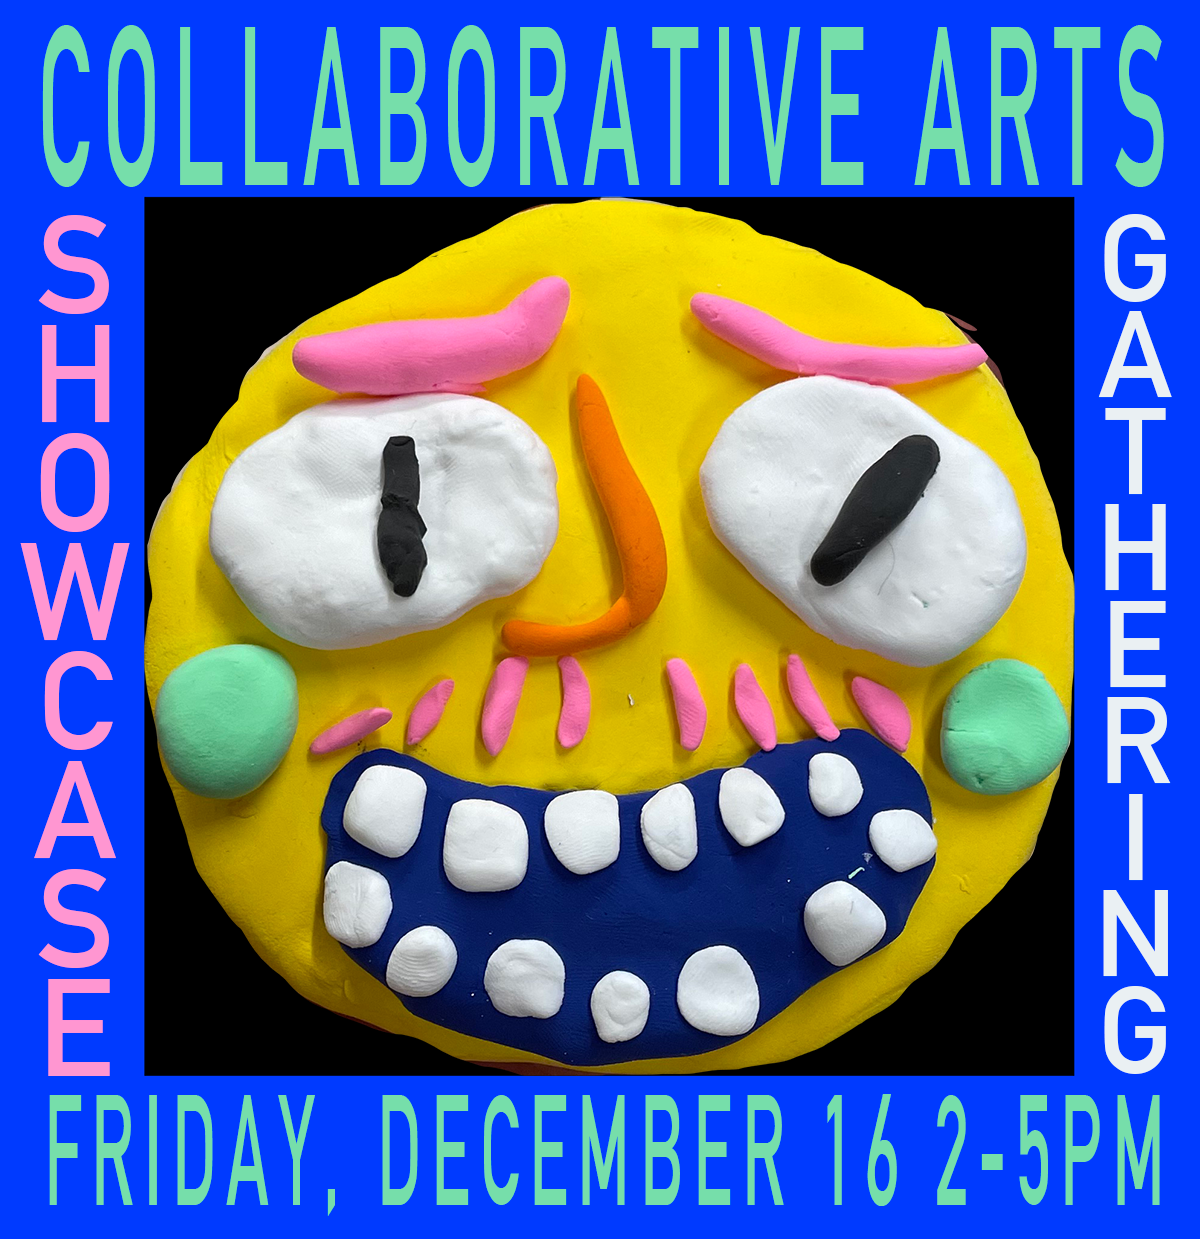 Collaborative Arts showcase flyer